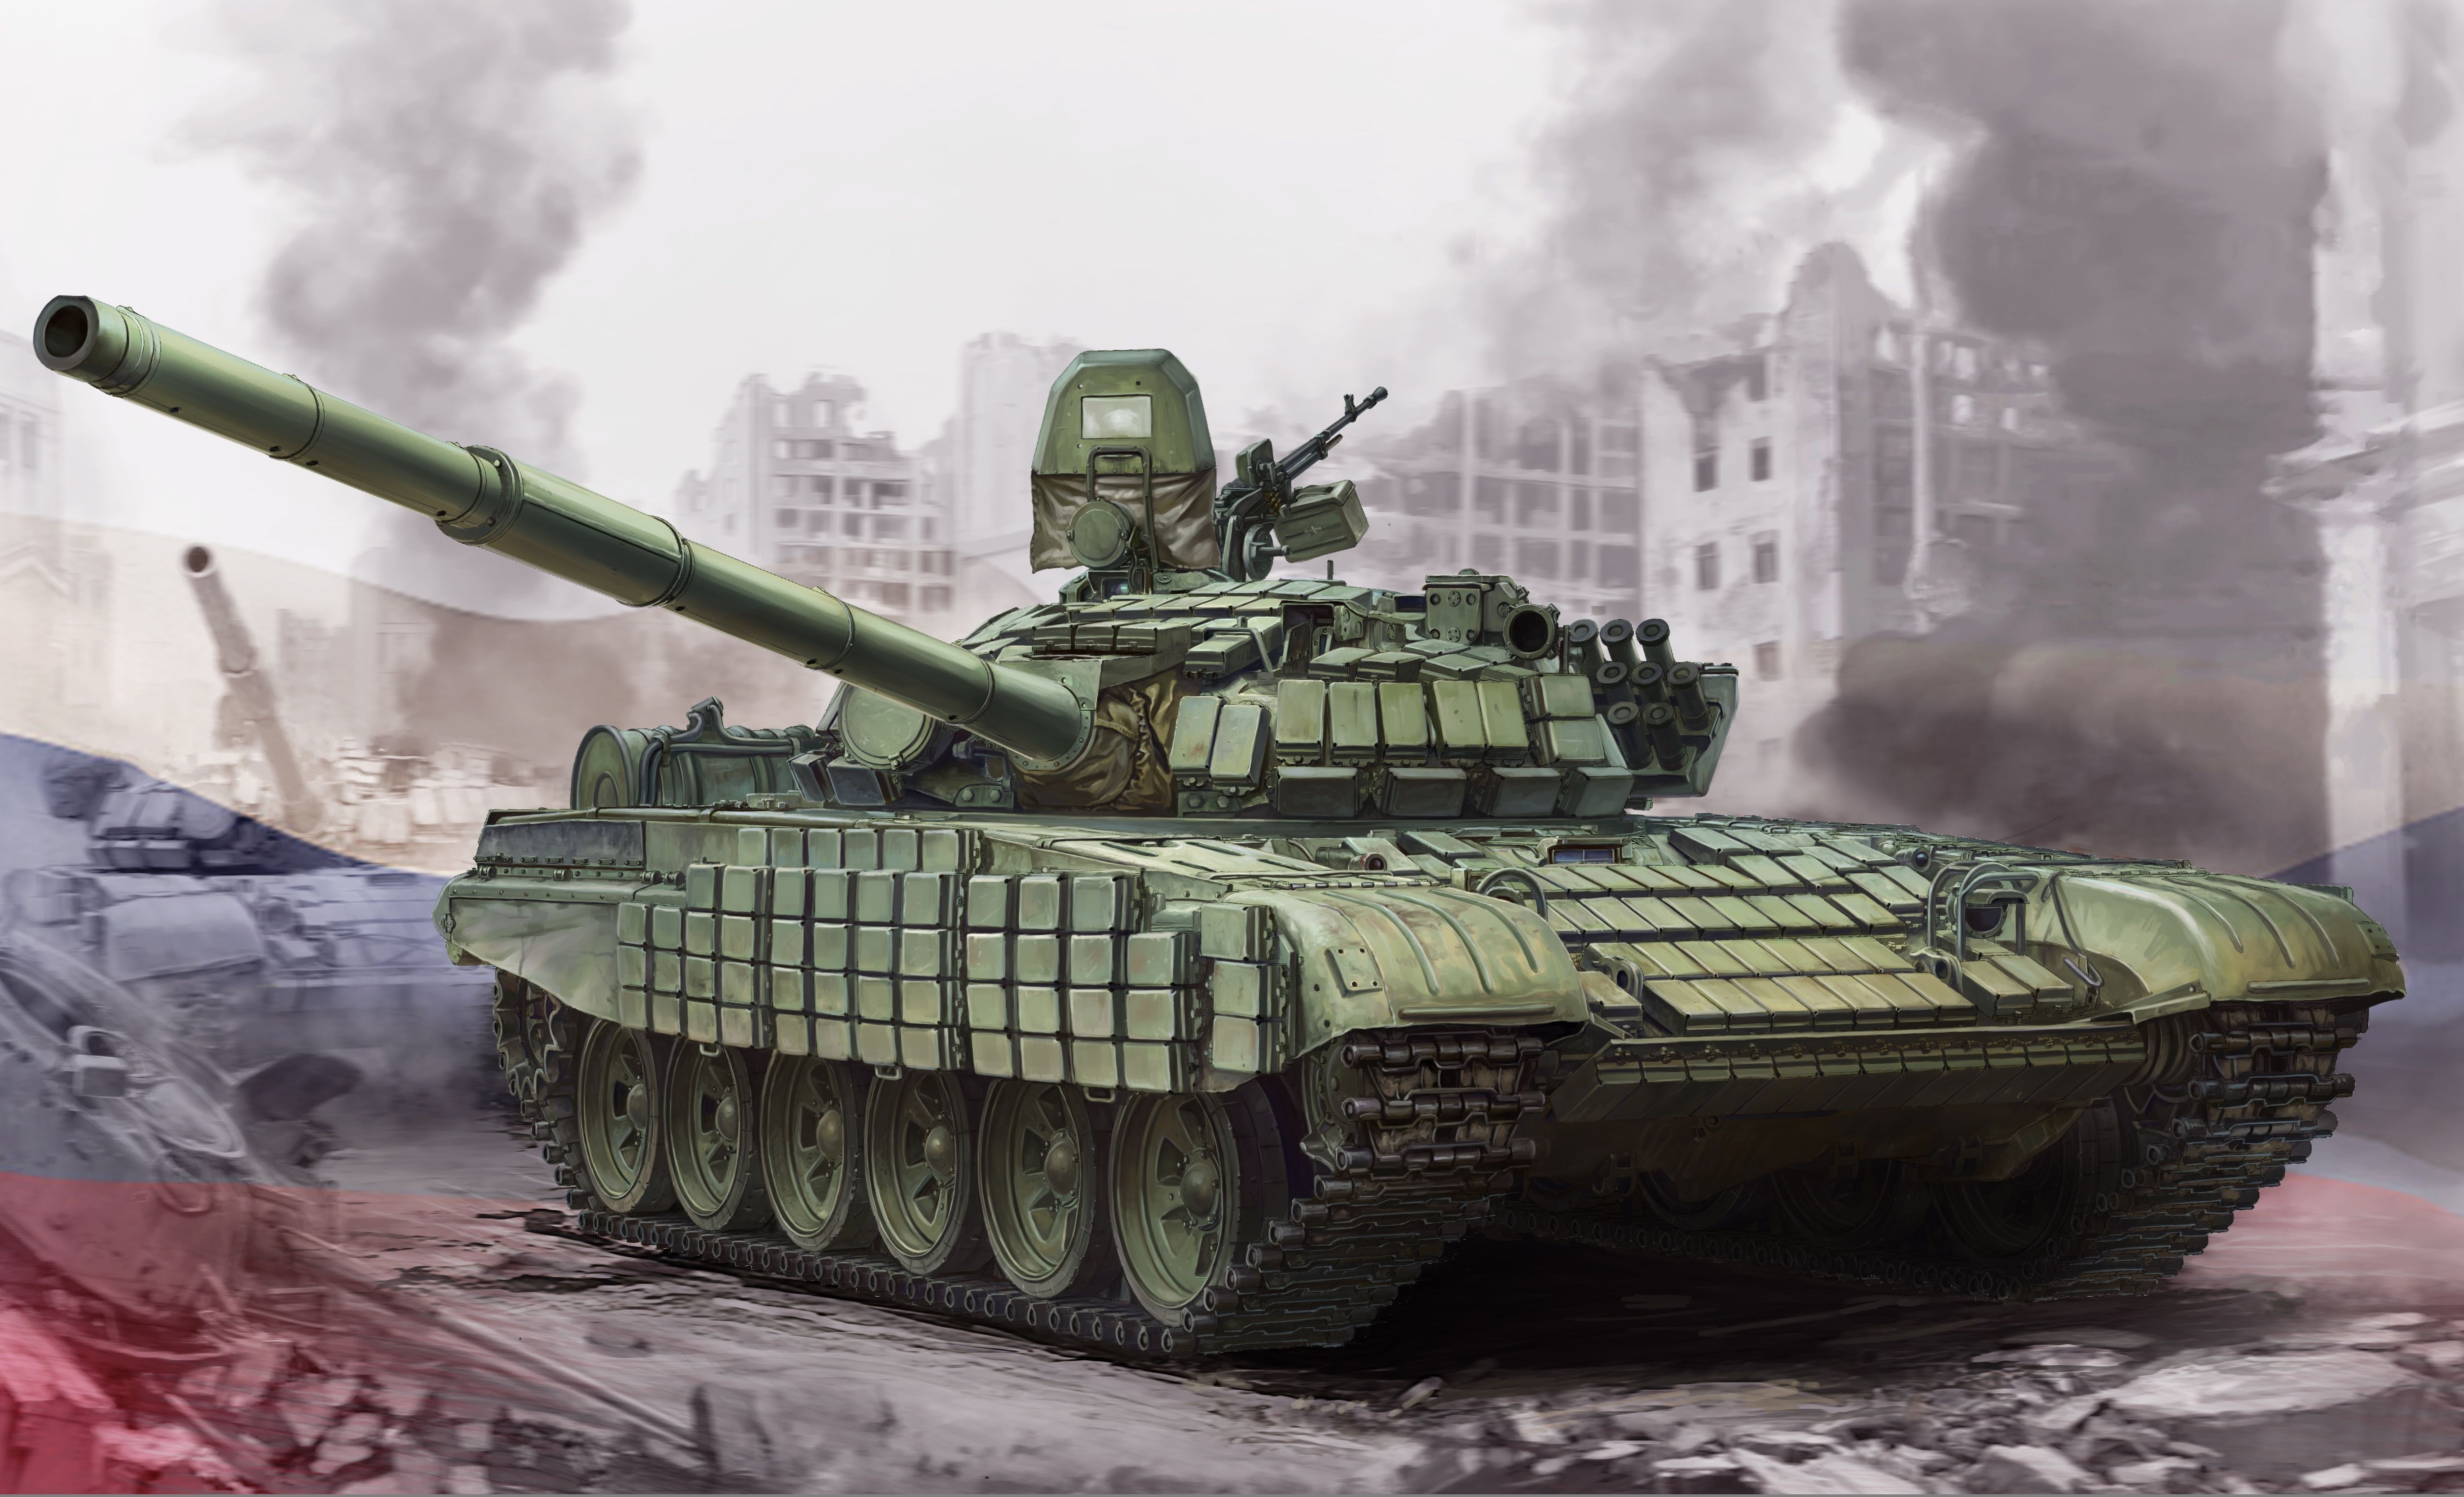 General 5488x3334 tank military ruins smoke gun Russian/Soviet tanks